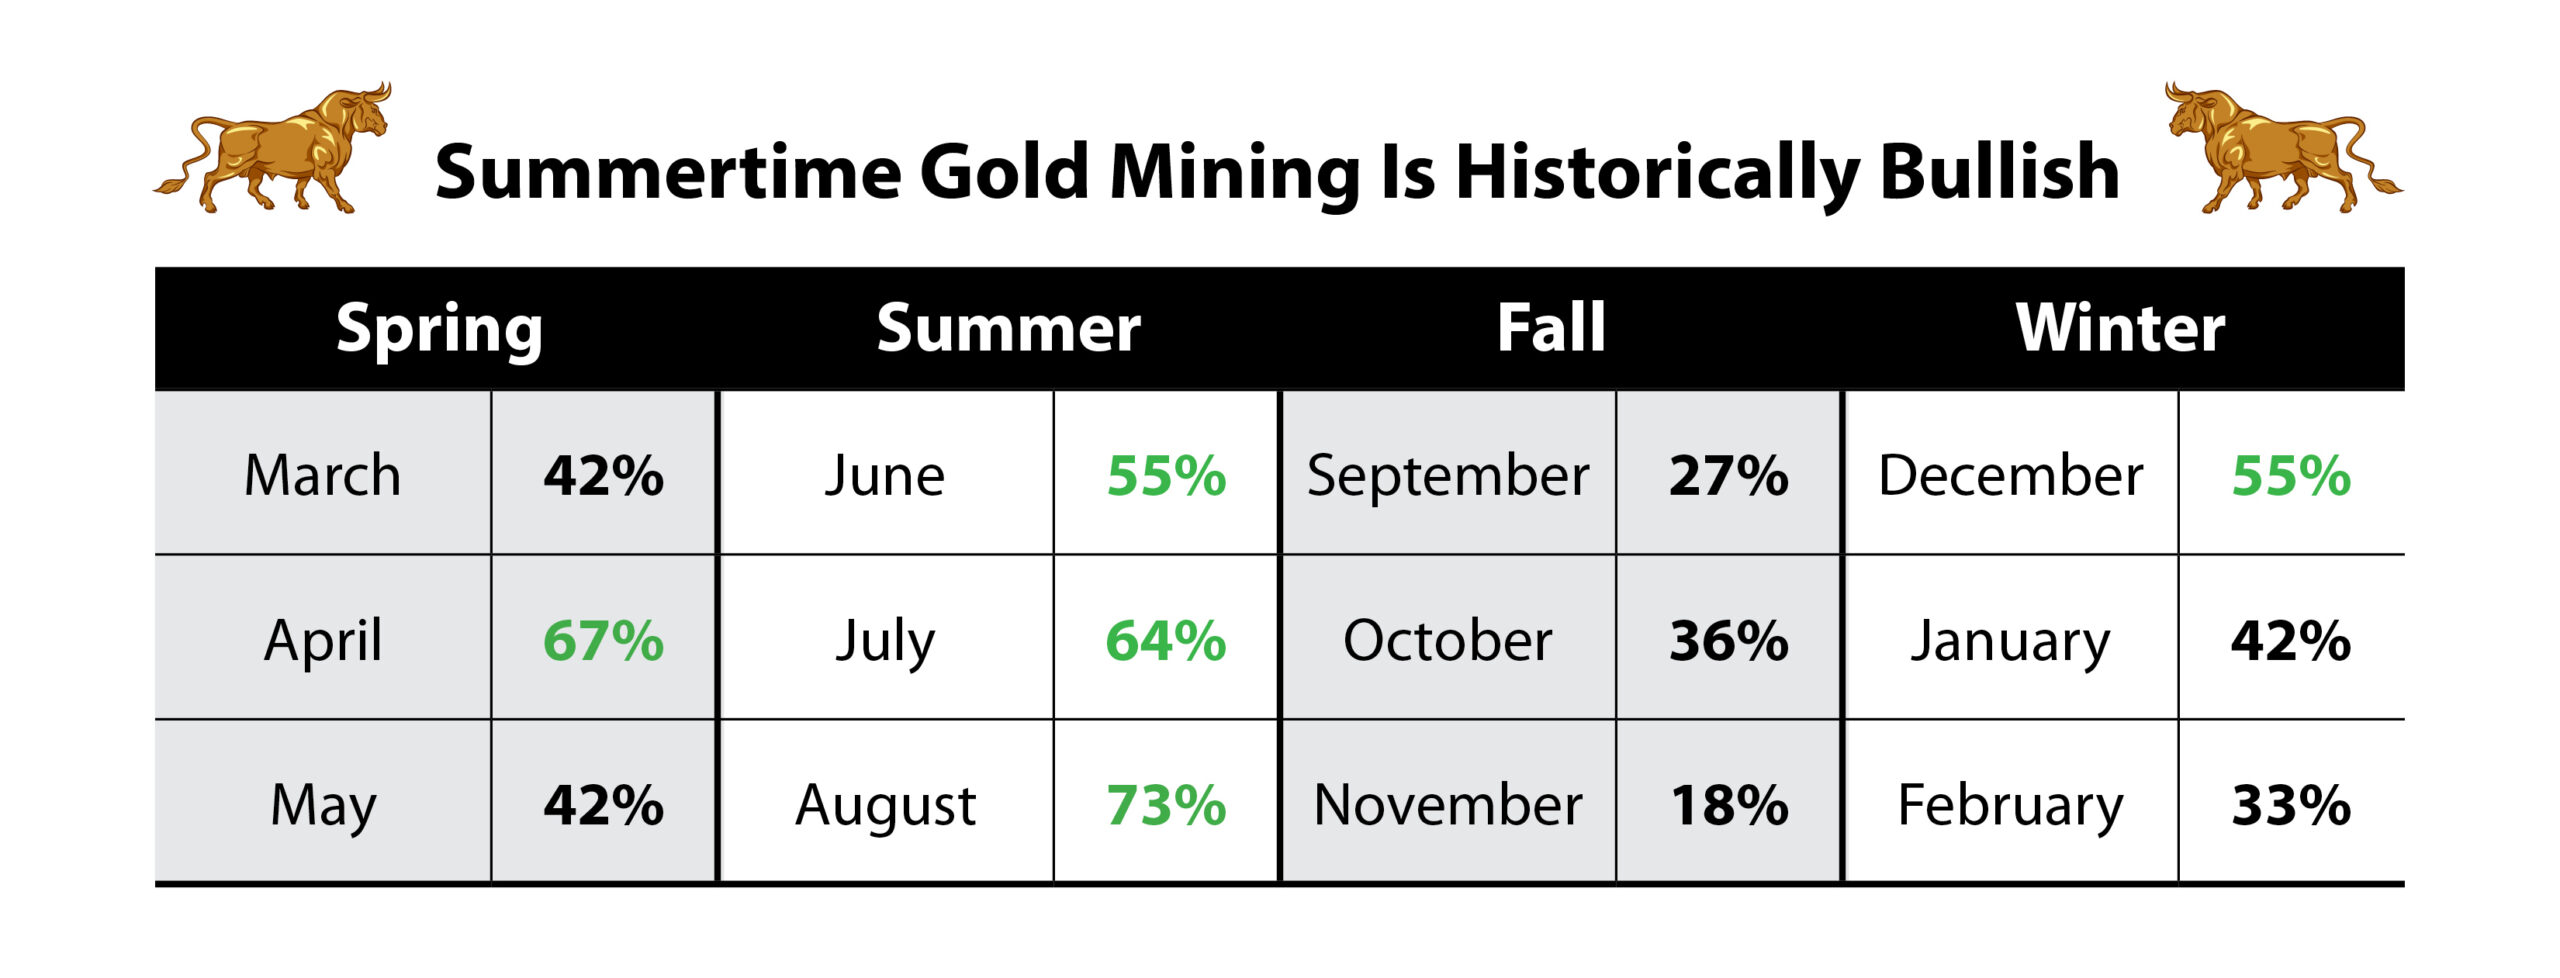 gold miners bullish summertime